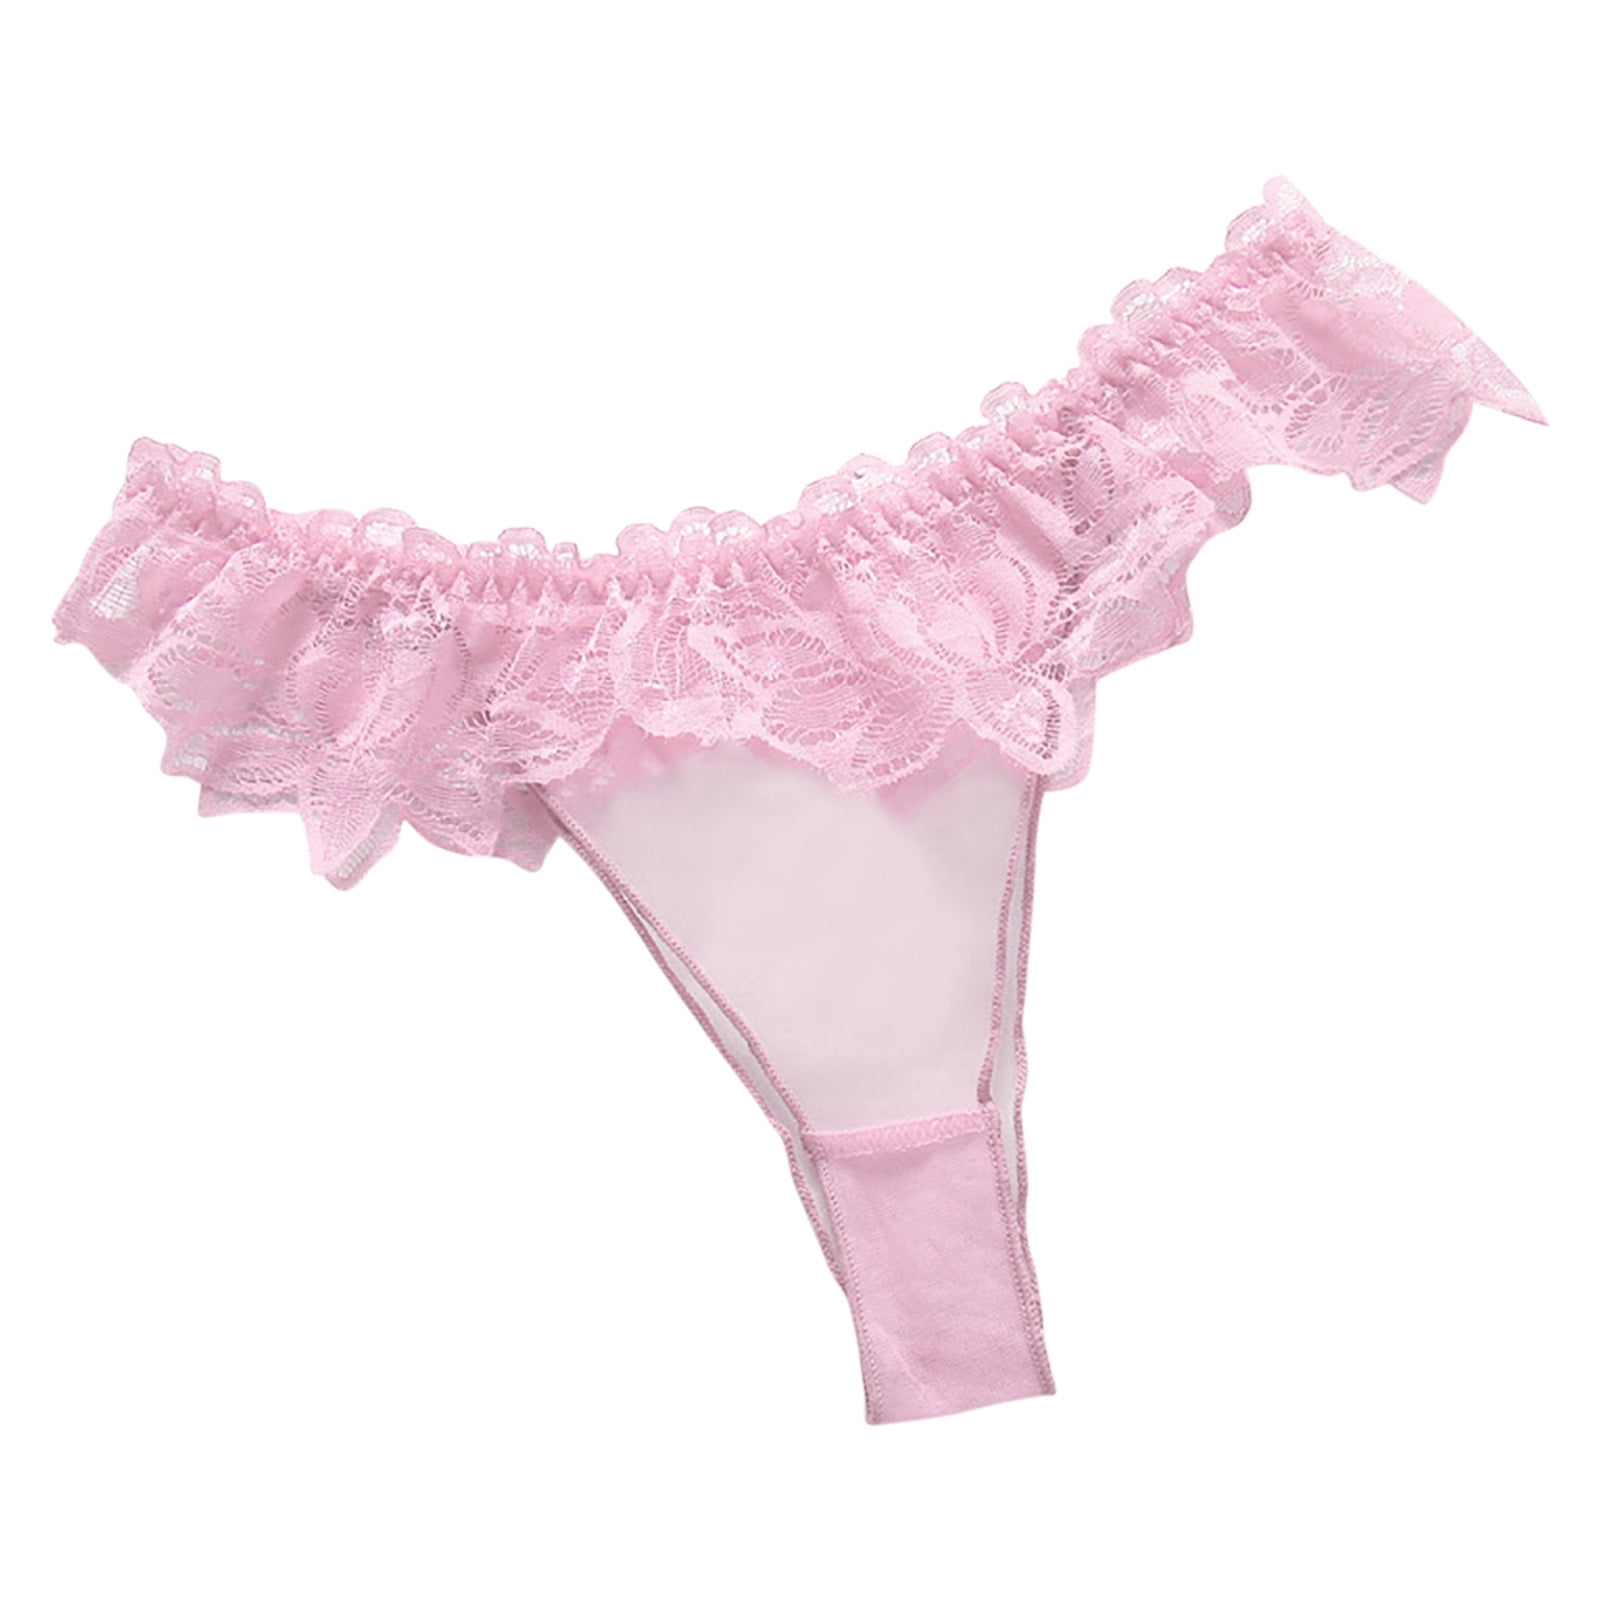 DealSeven fashion Women Thong Pink Panty